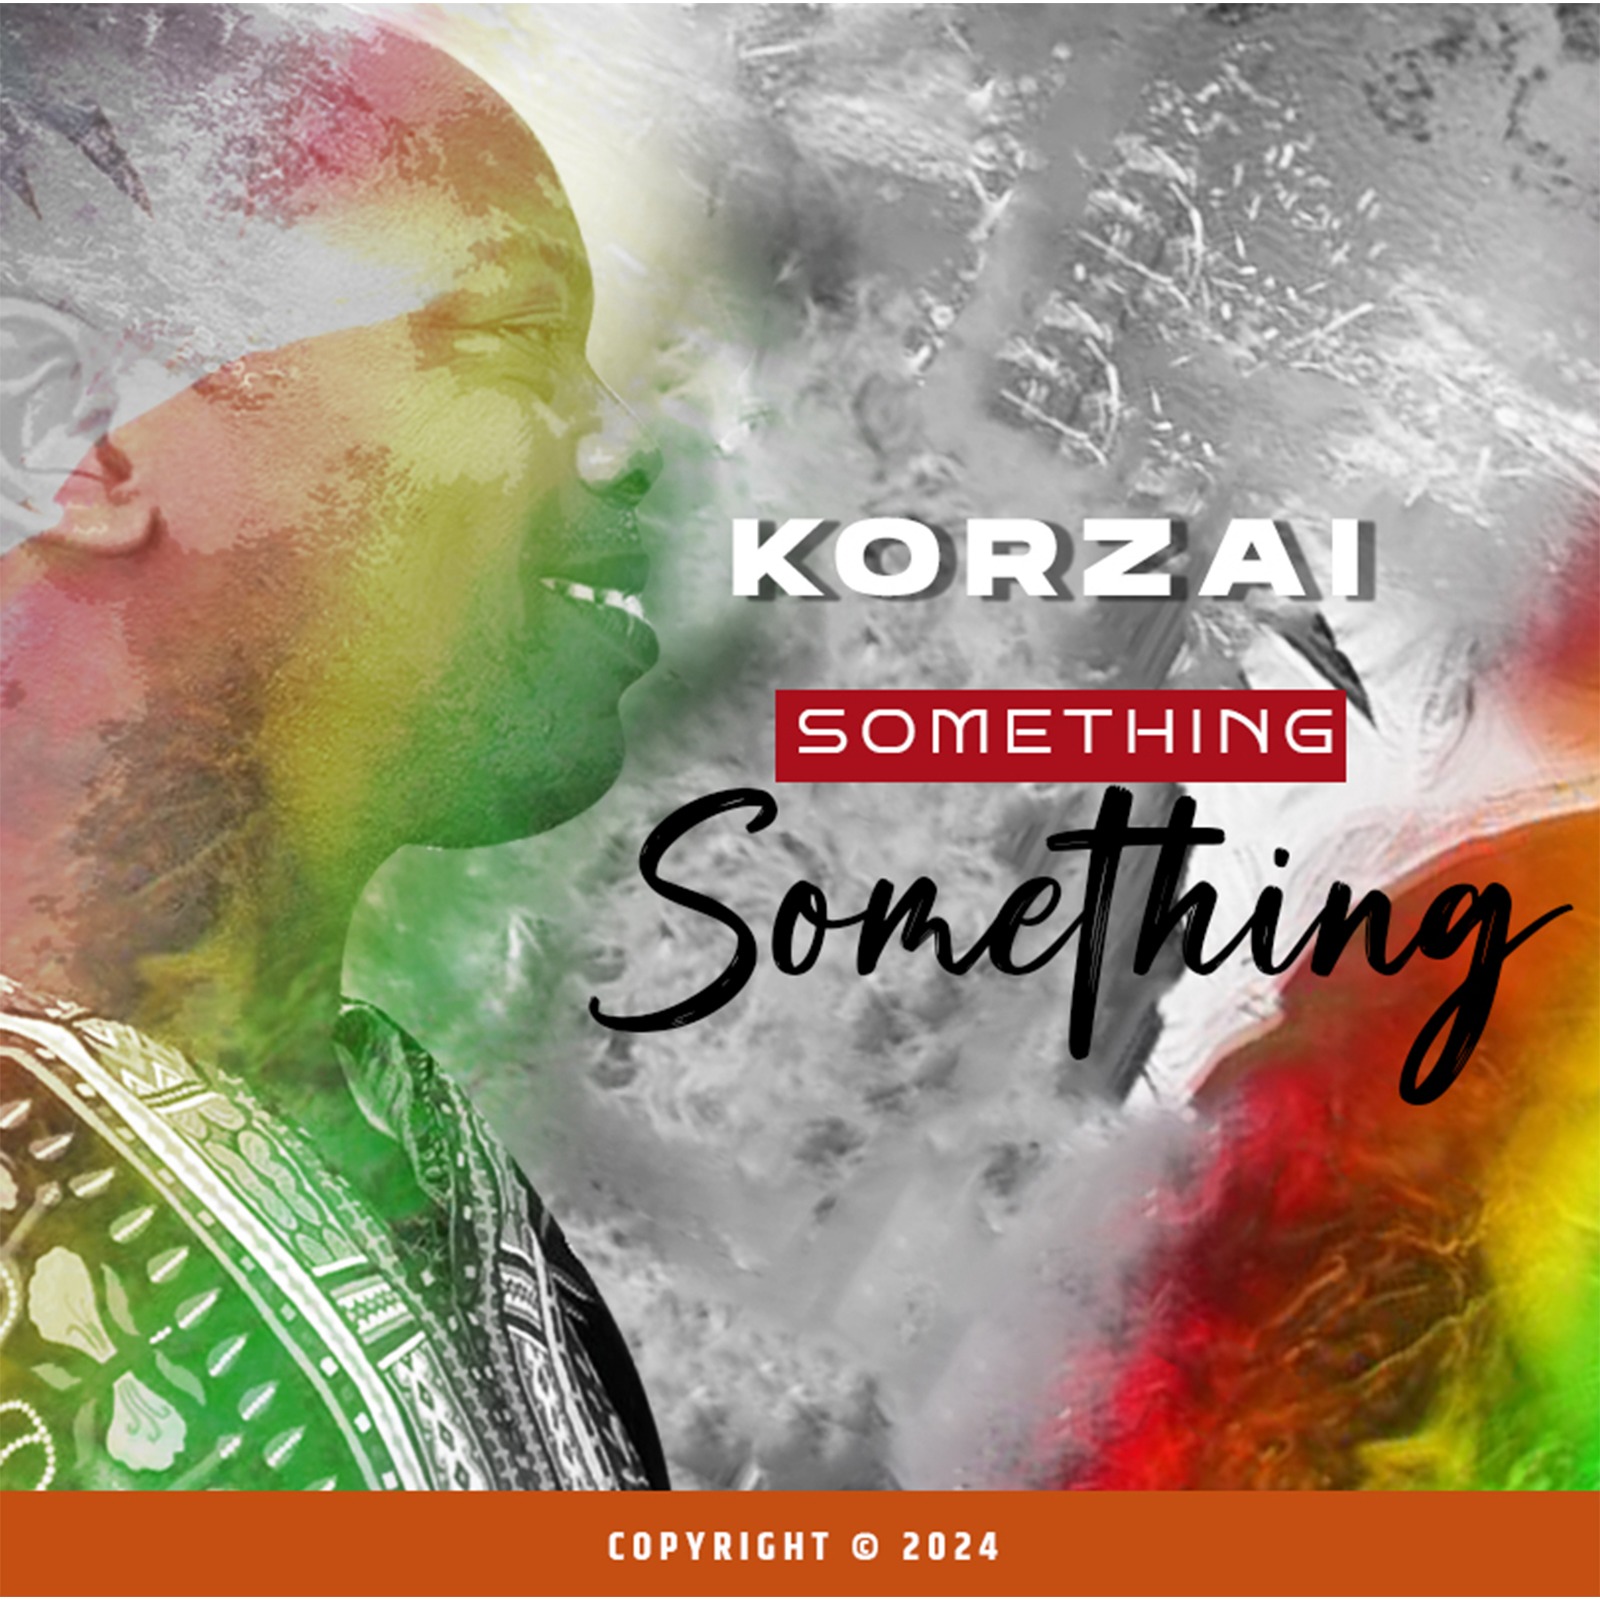 Broadcaster Turned Musician Korzai Releases Debut Single “Something Something”